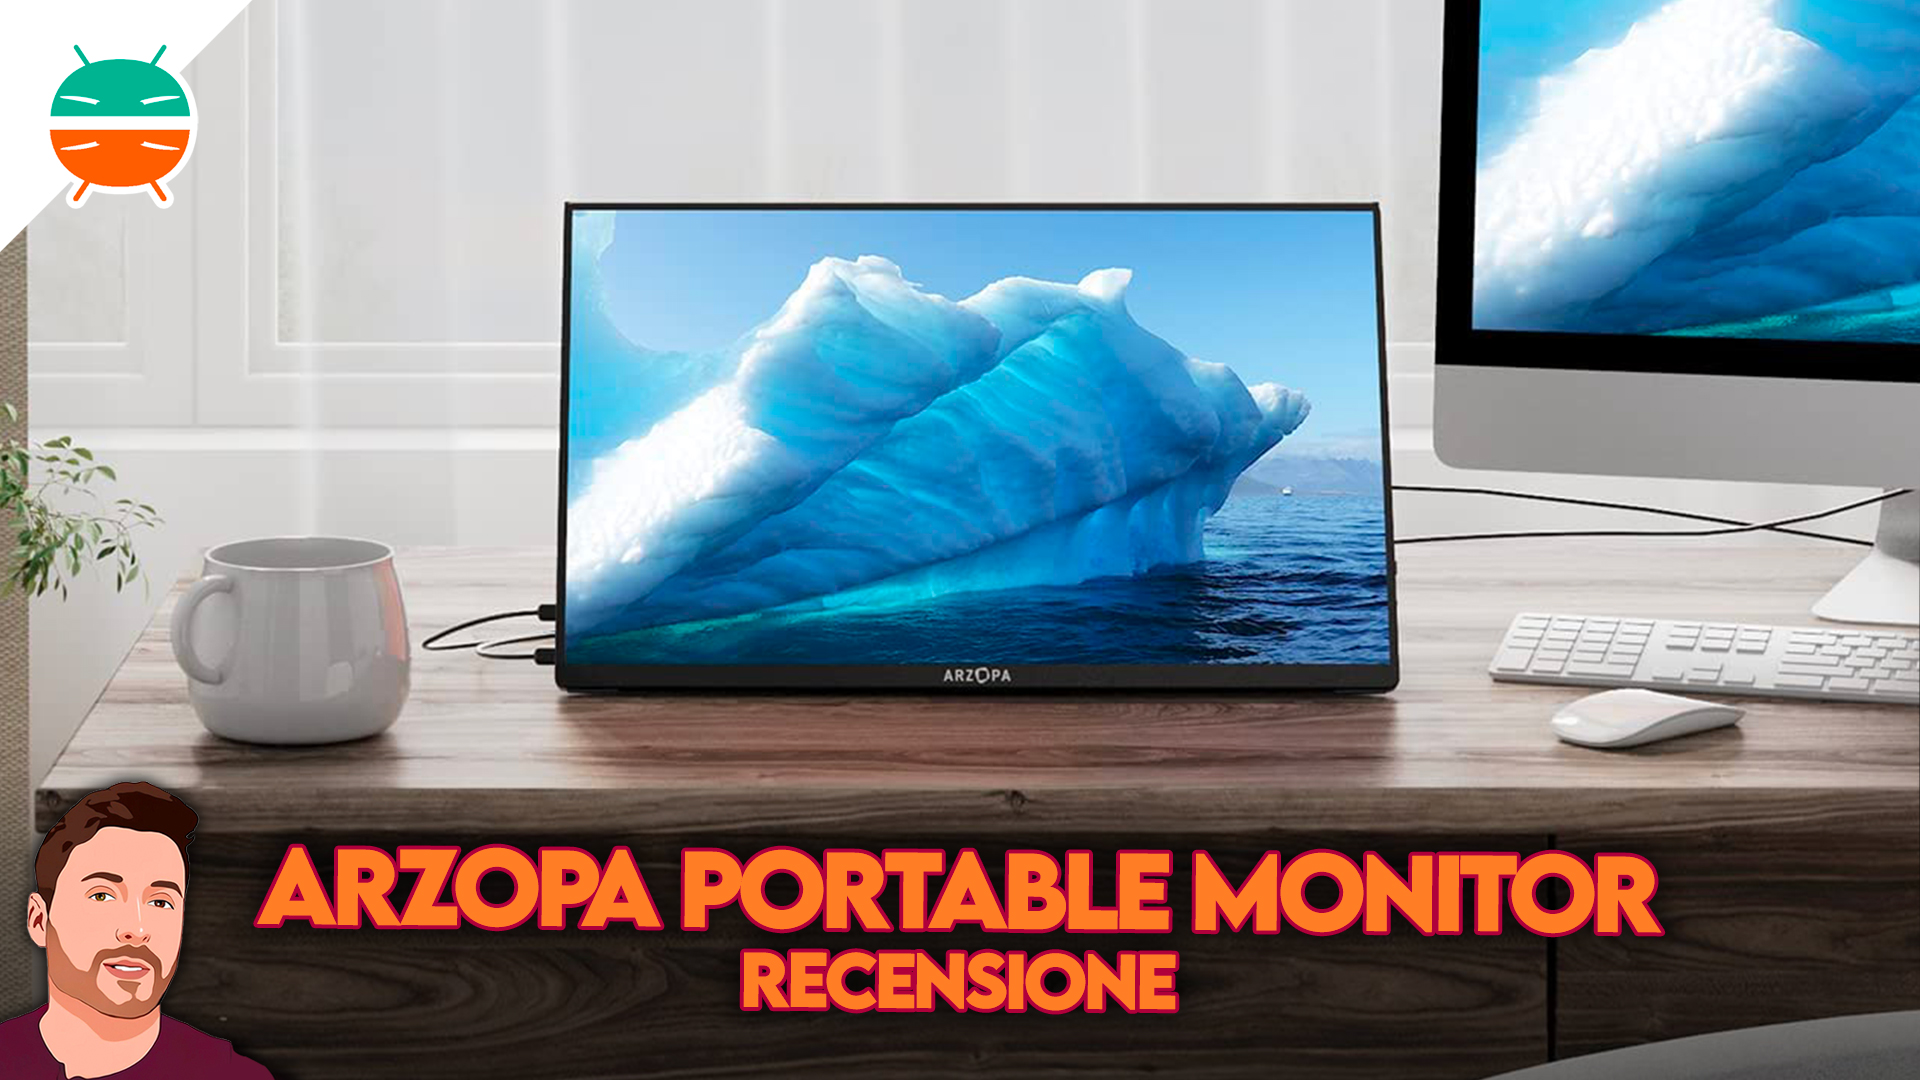 Revisión de Arzopa 13.3 '': monitor portátil USB-C barato - GizChina.it